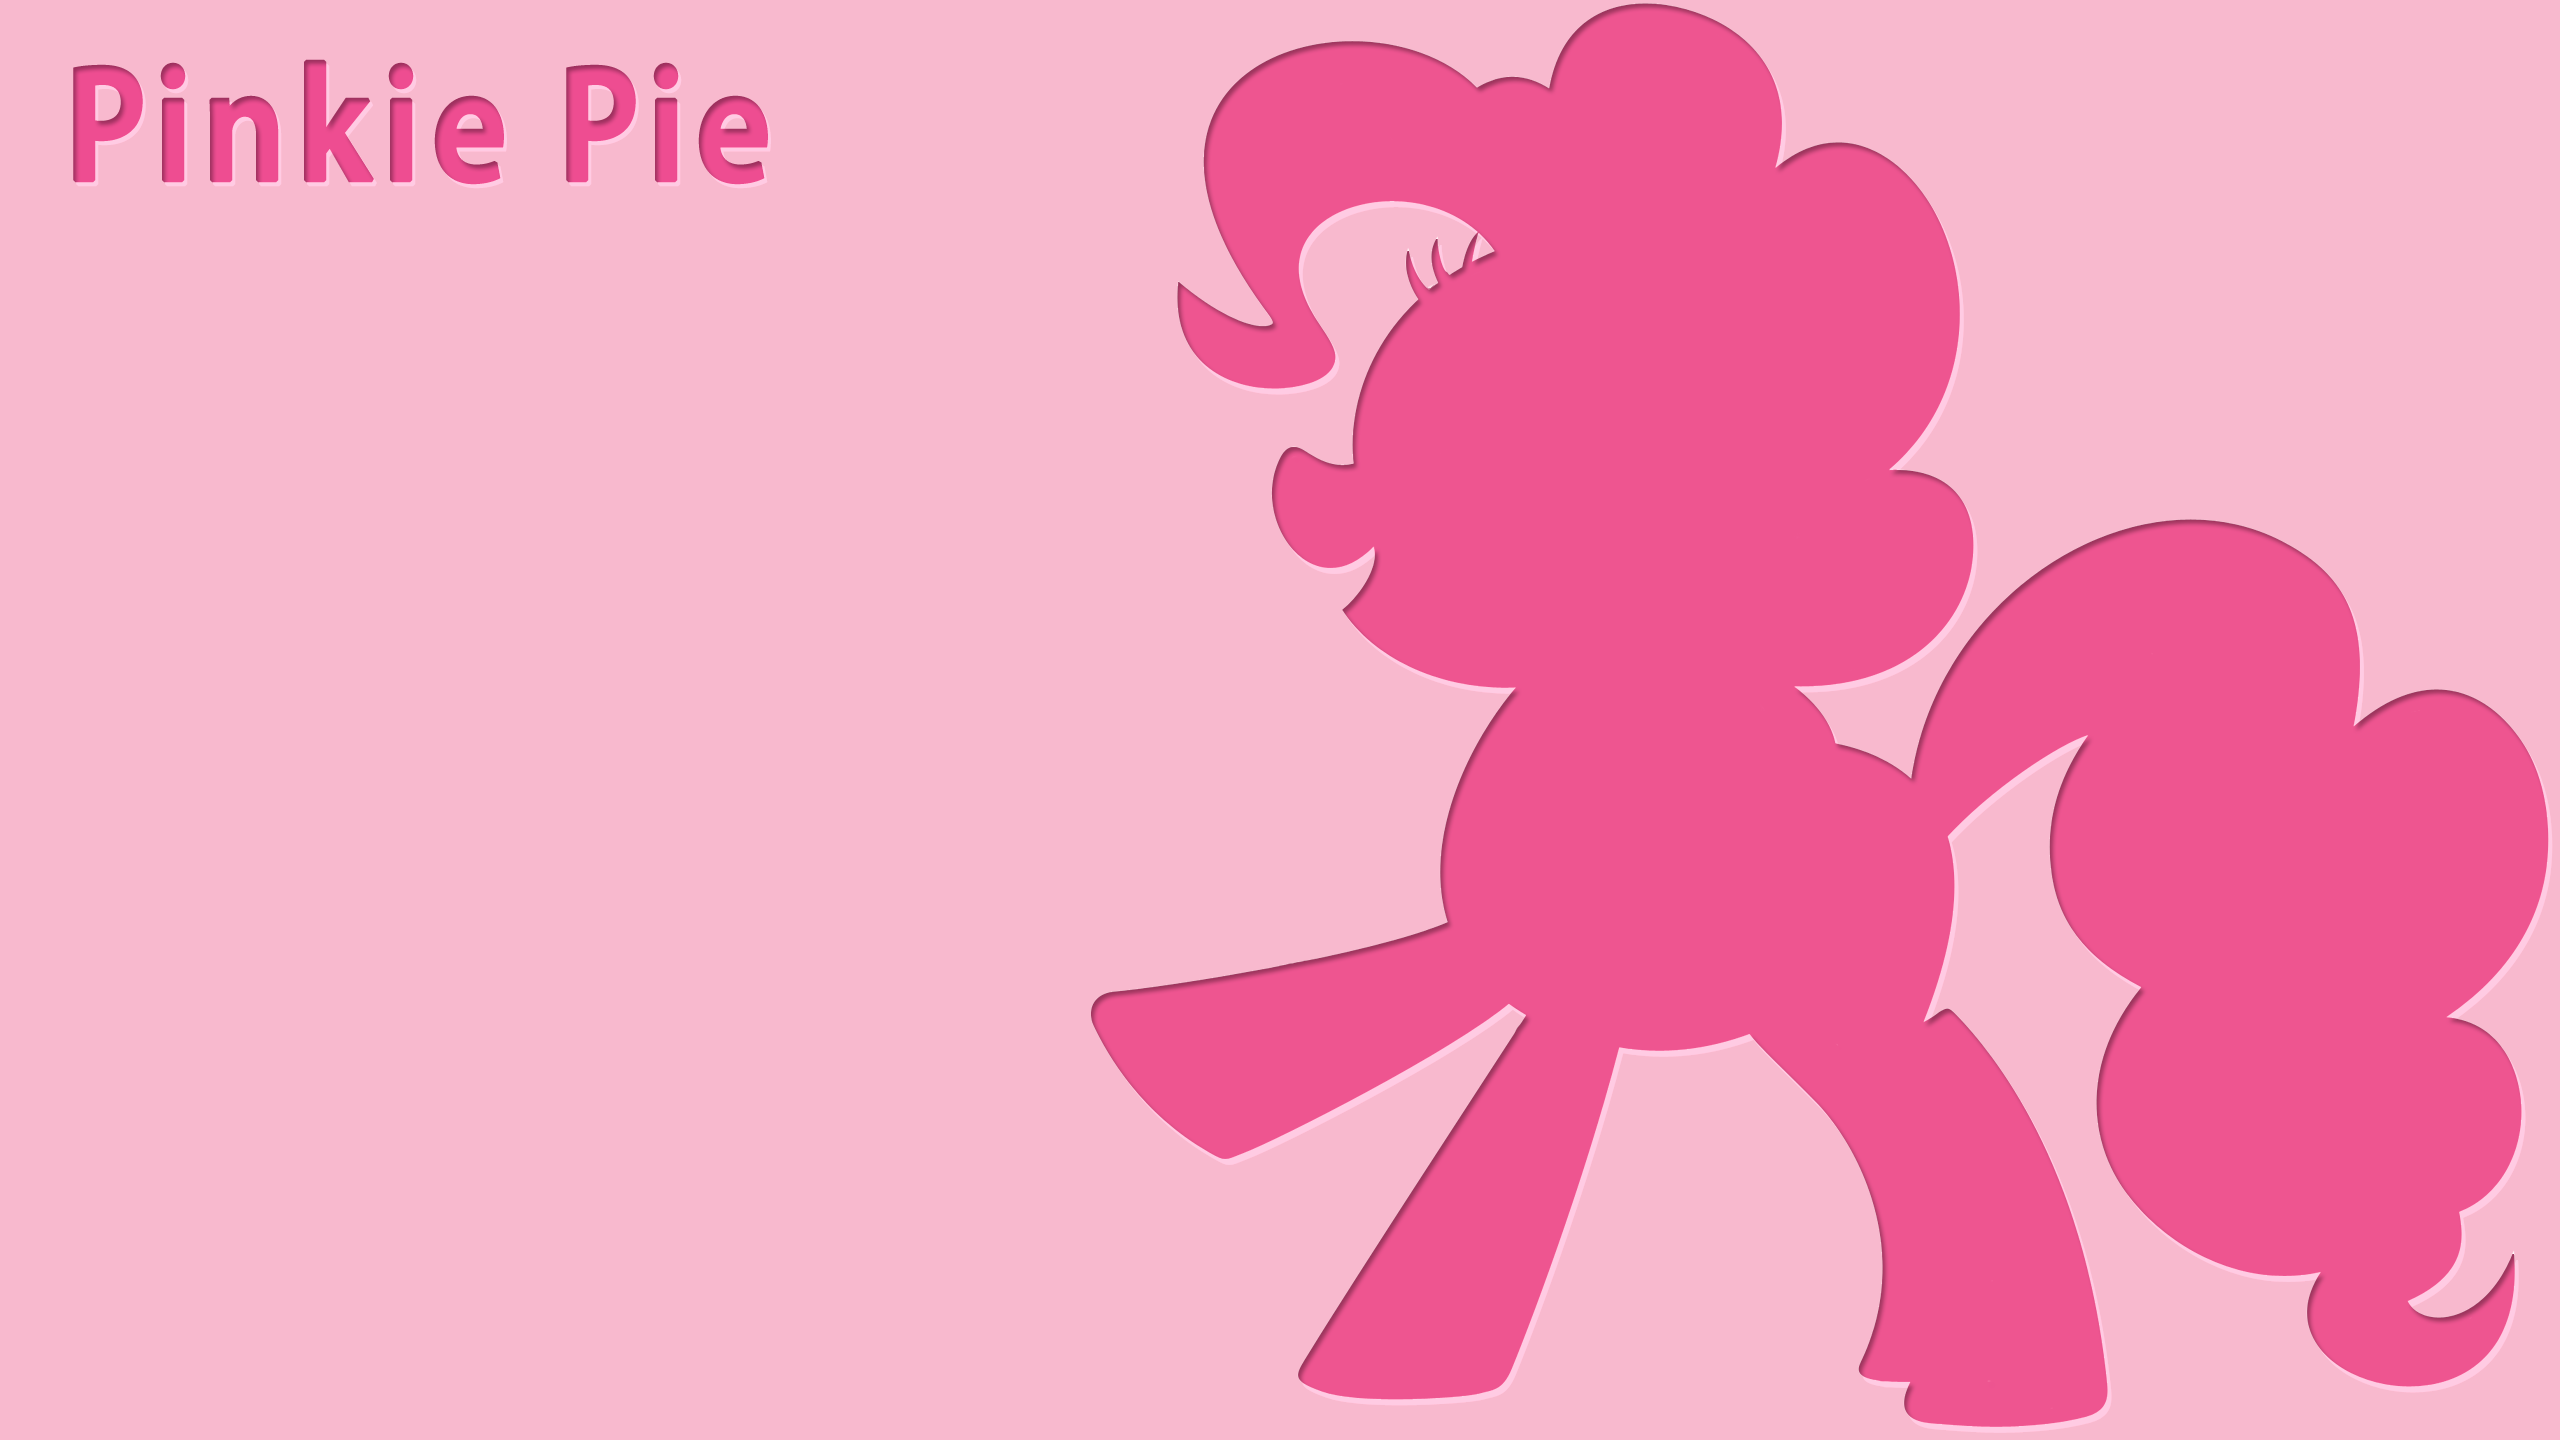 Pinkie Pie LetterPress Wallpaper by alanfernandoflores01 and Tigersoul96